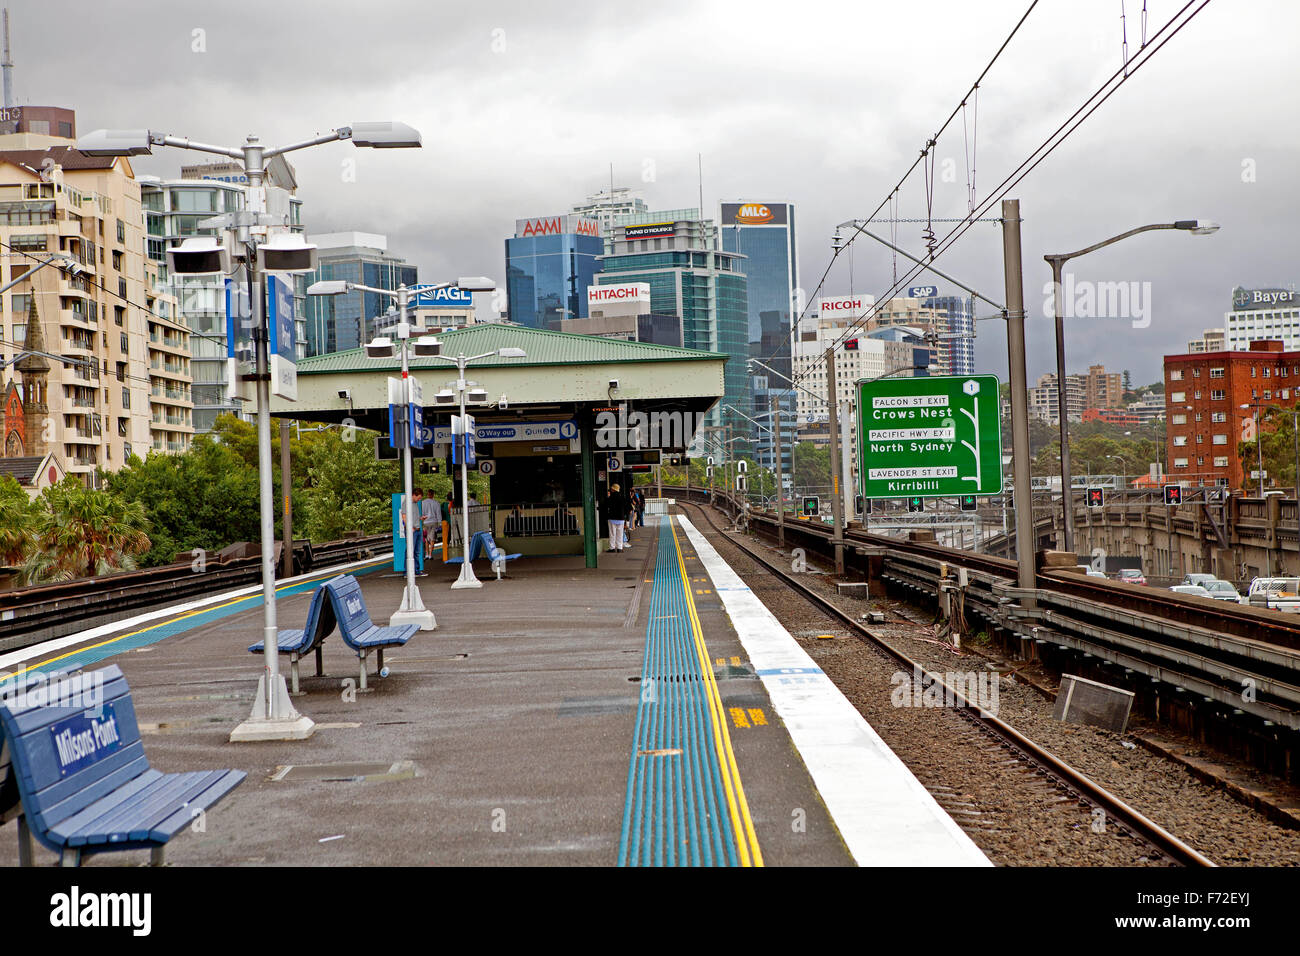 Milsons Point, railway train station platform, Sydney, NSW, New South Wales, Australia Stock Photo